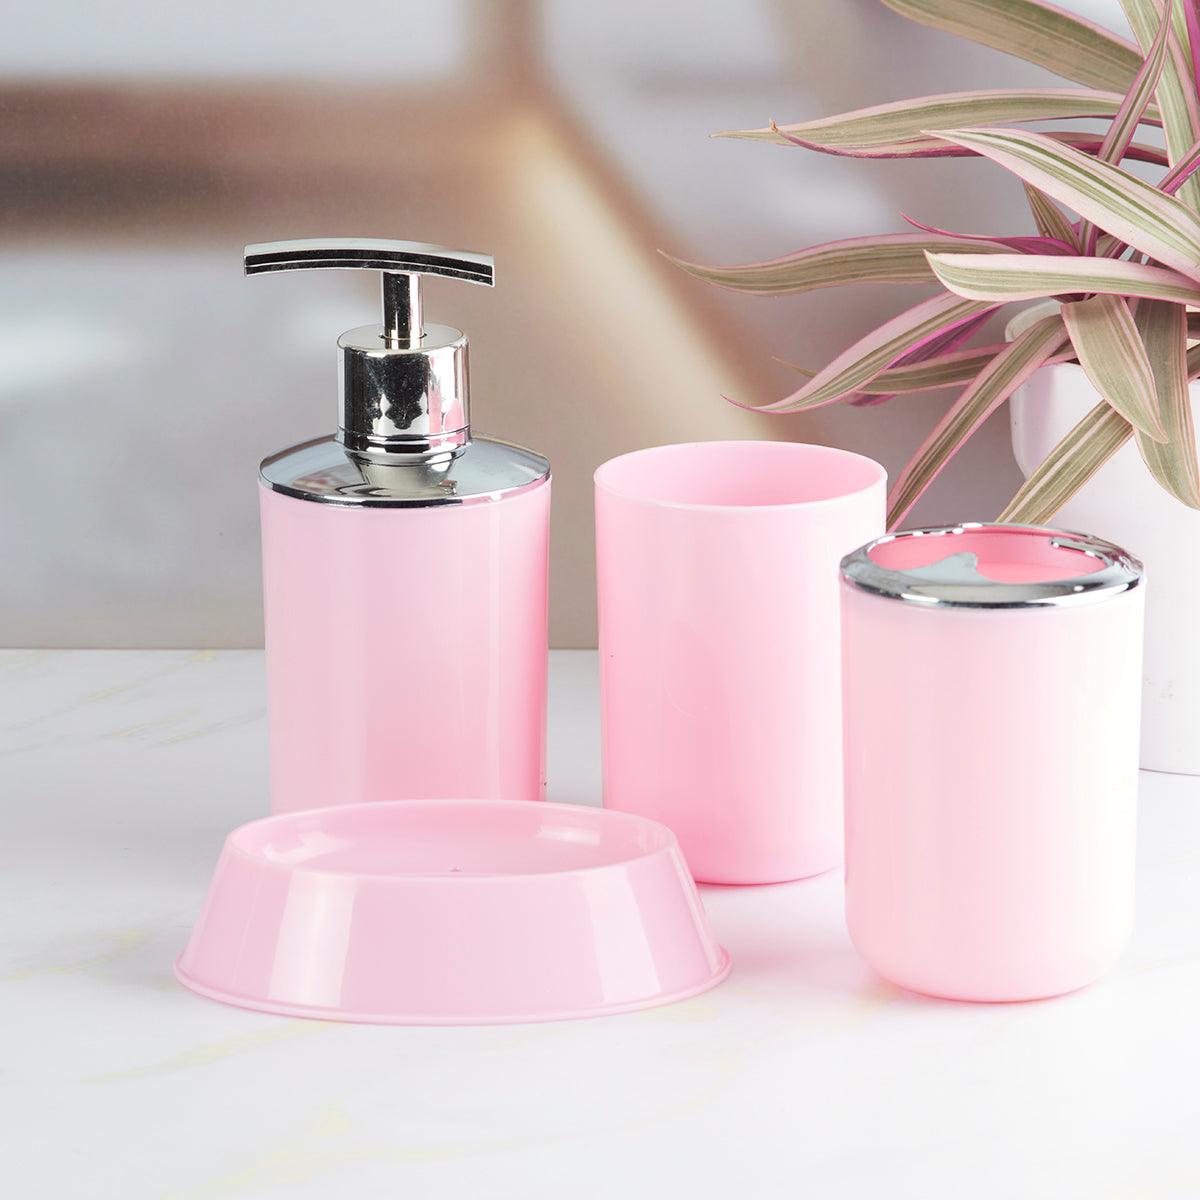 Acrylic Bathroom Accessories Set of 4 Bath Set with Soap Dispenser (7395)